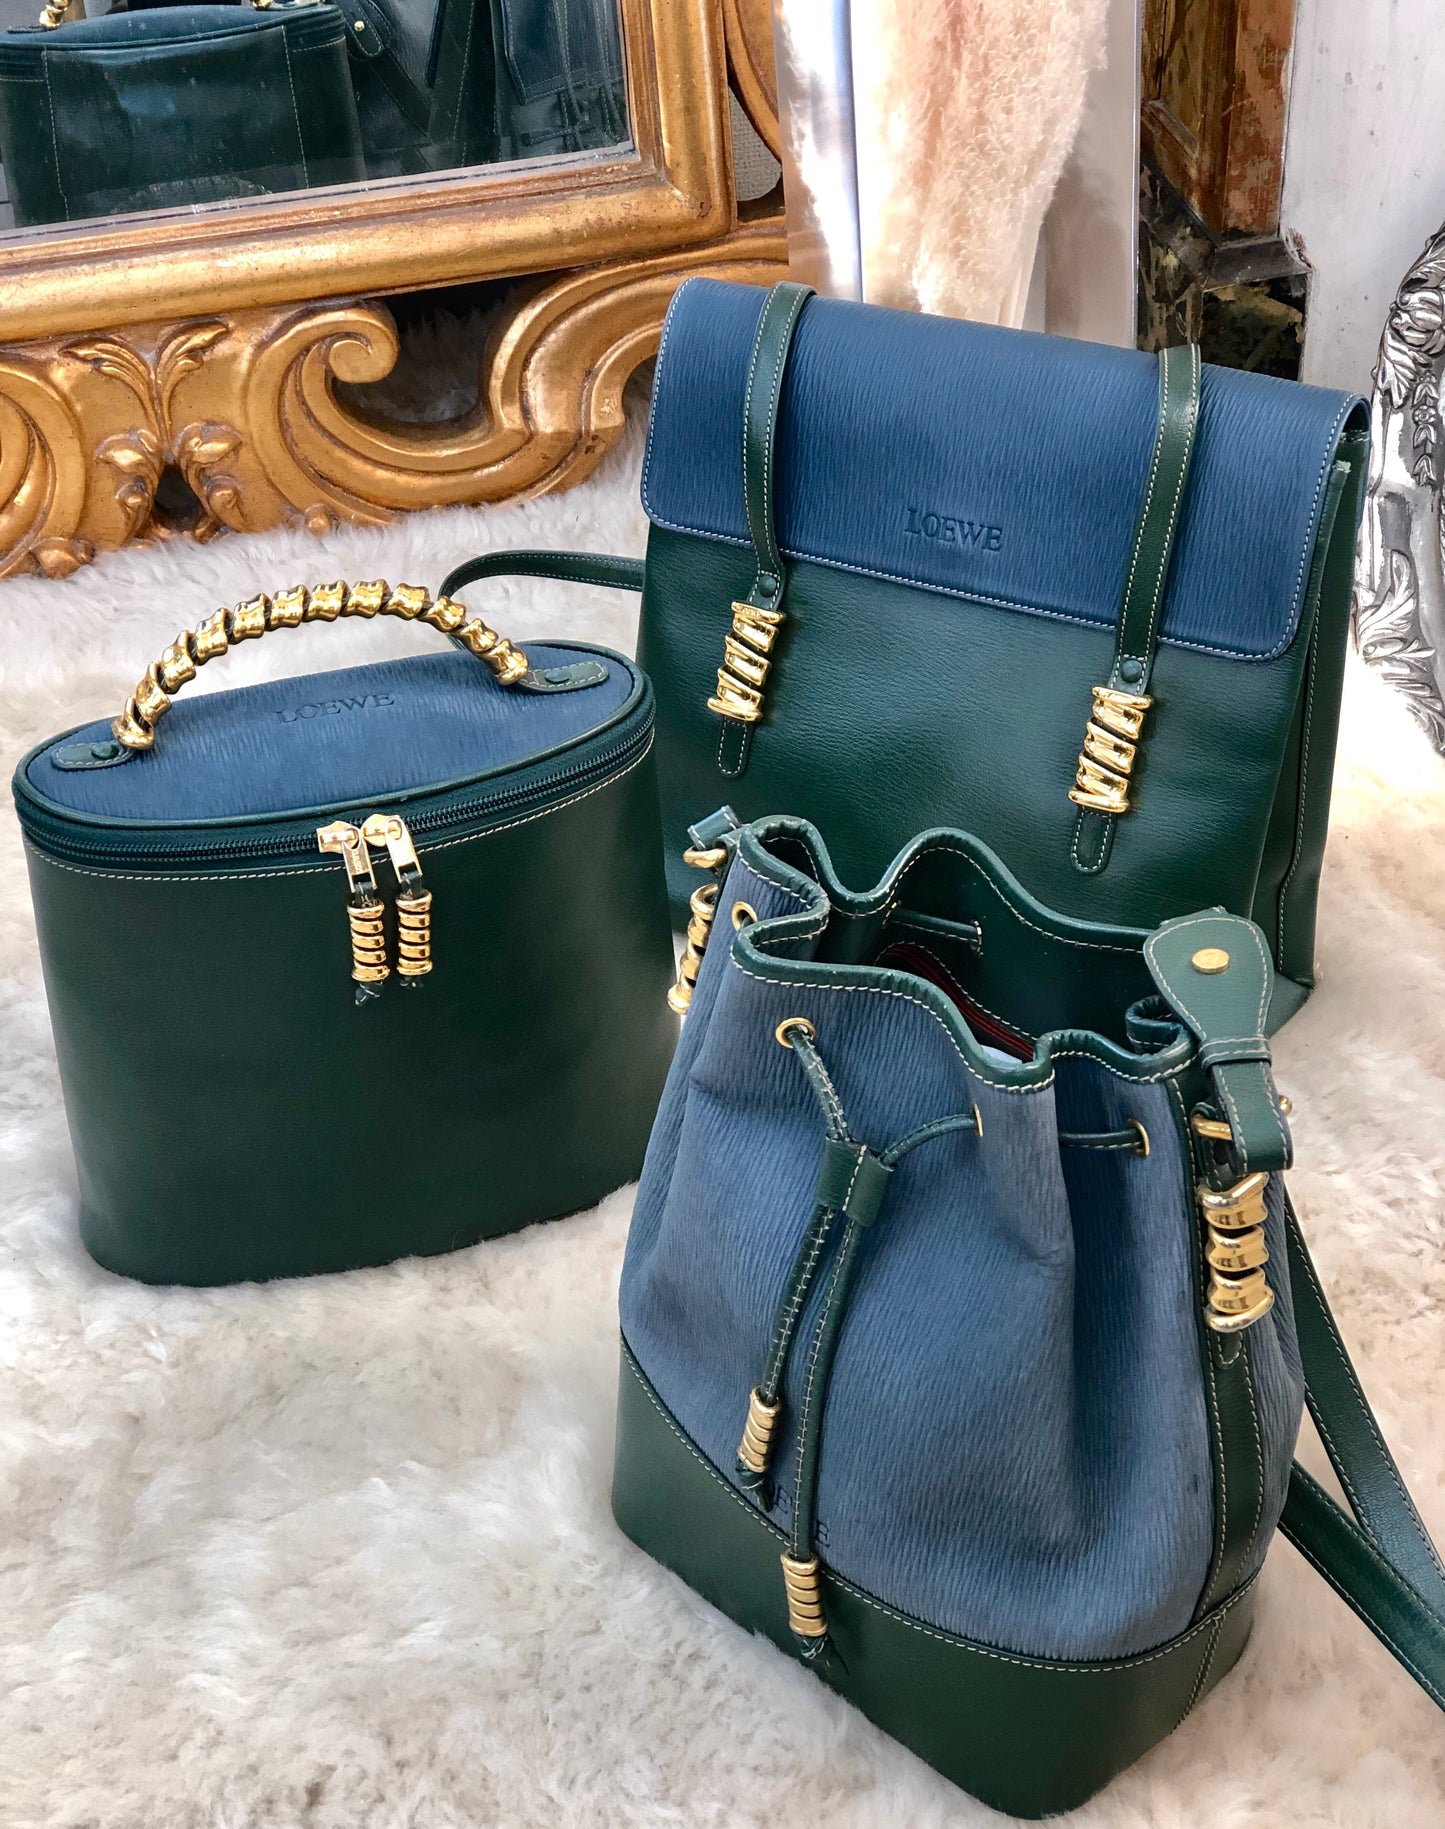 LOEWE Velazquez Handbag Vanitybag Green Vintage Old 3exasj